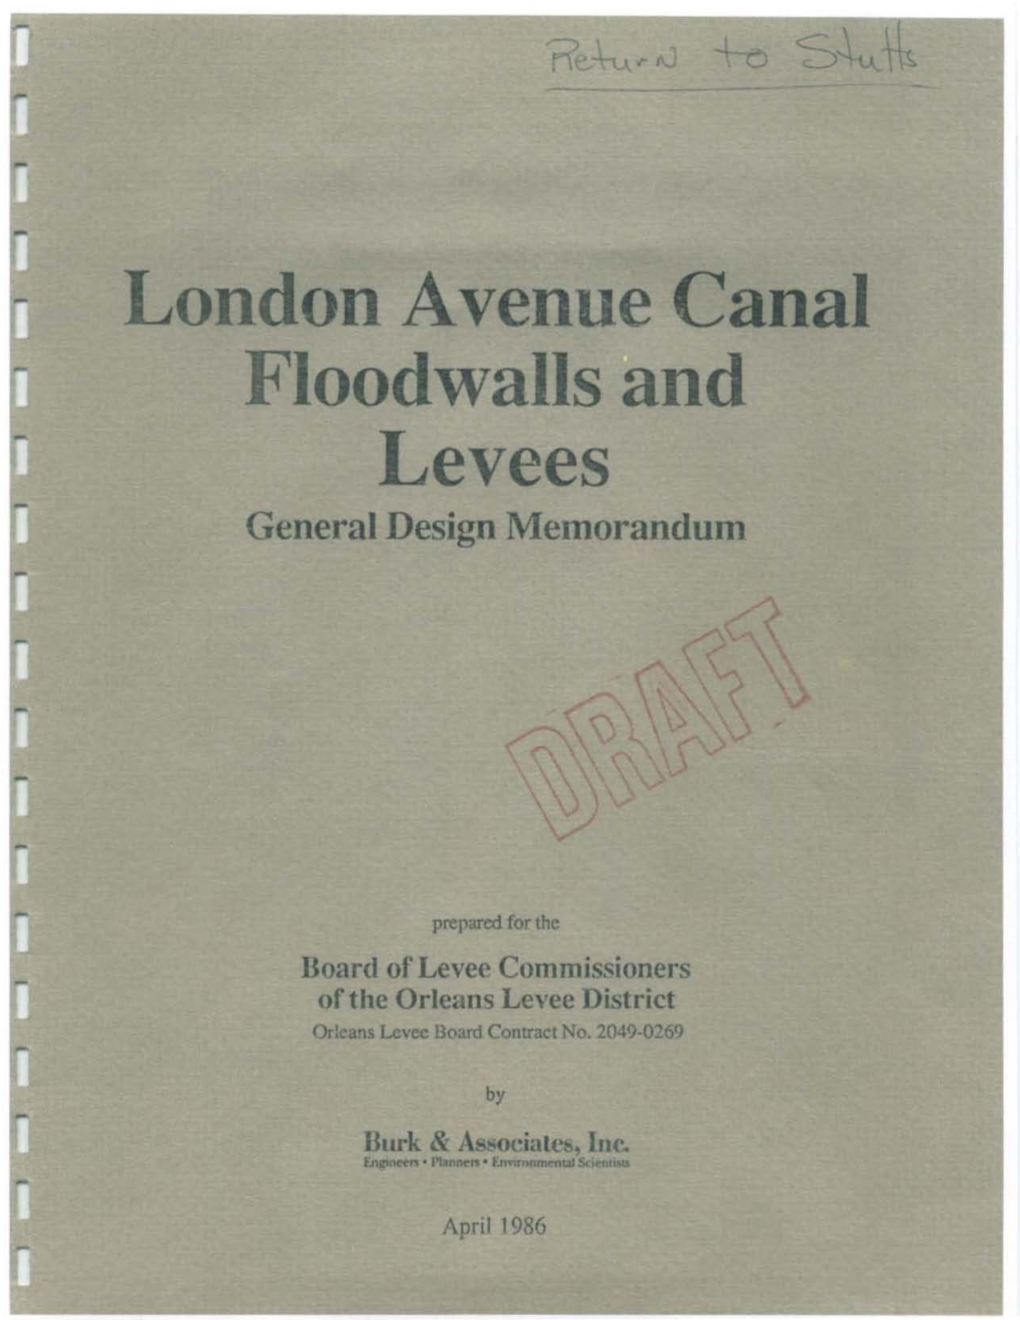 London Avenue Canal Floodwalls General Design Memorandum